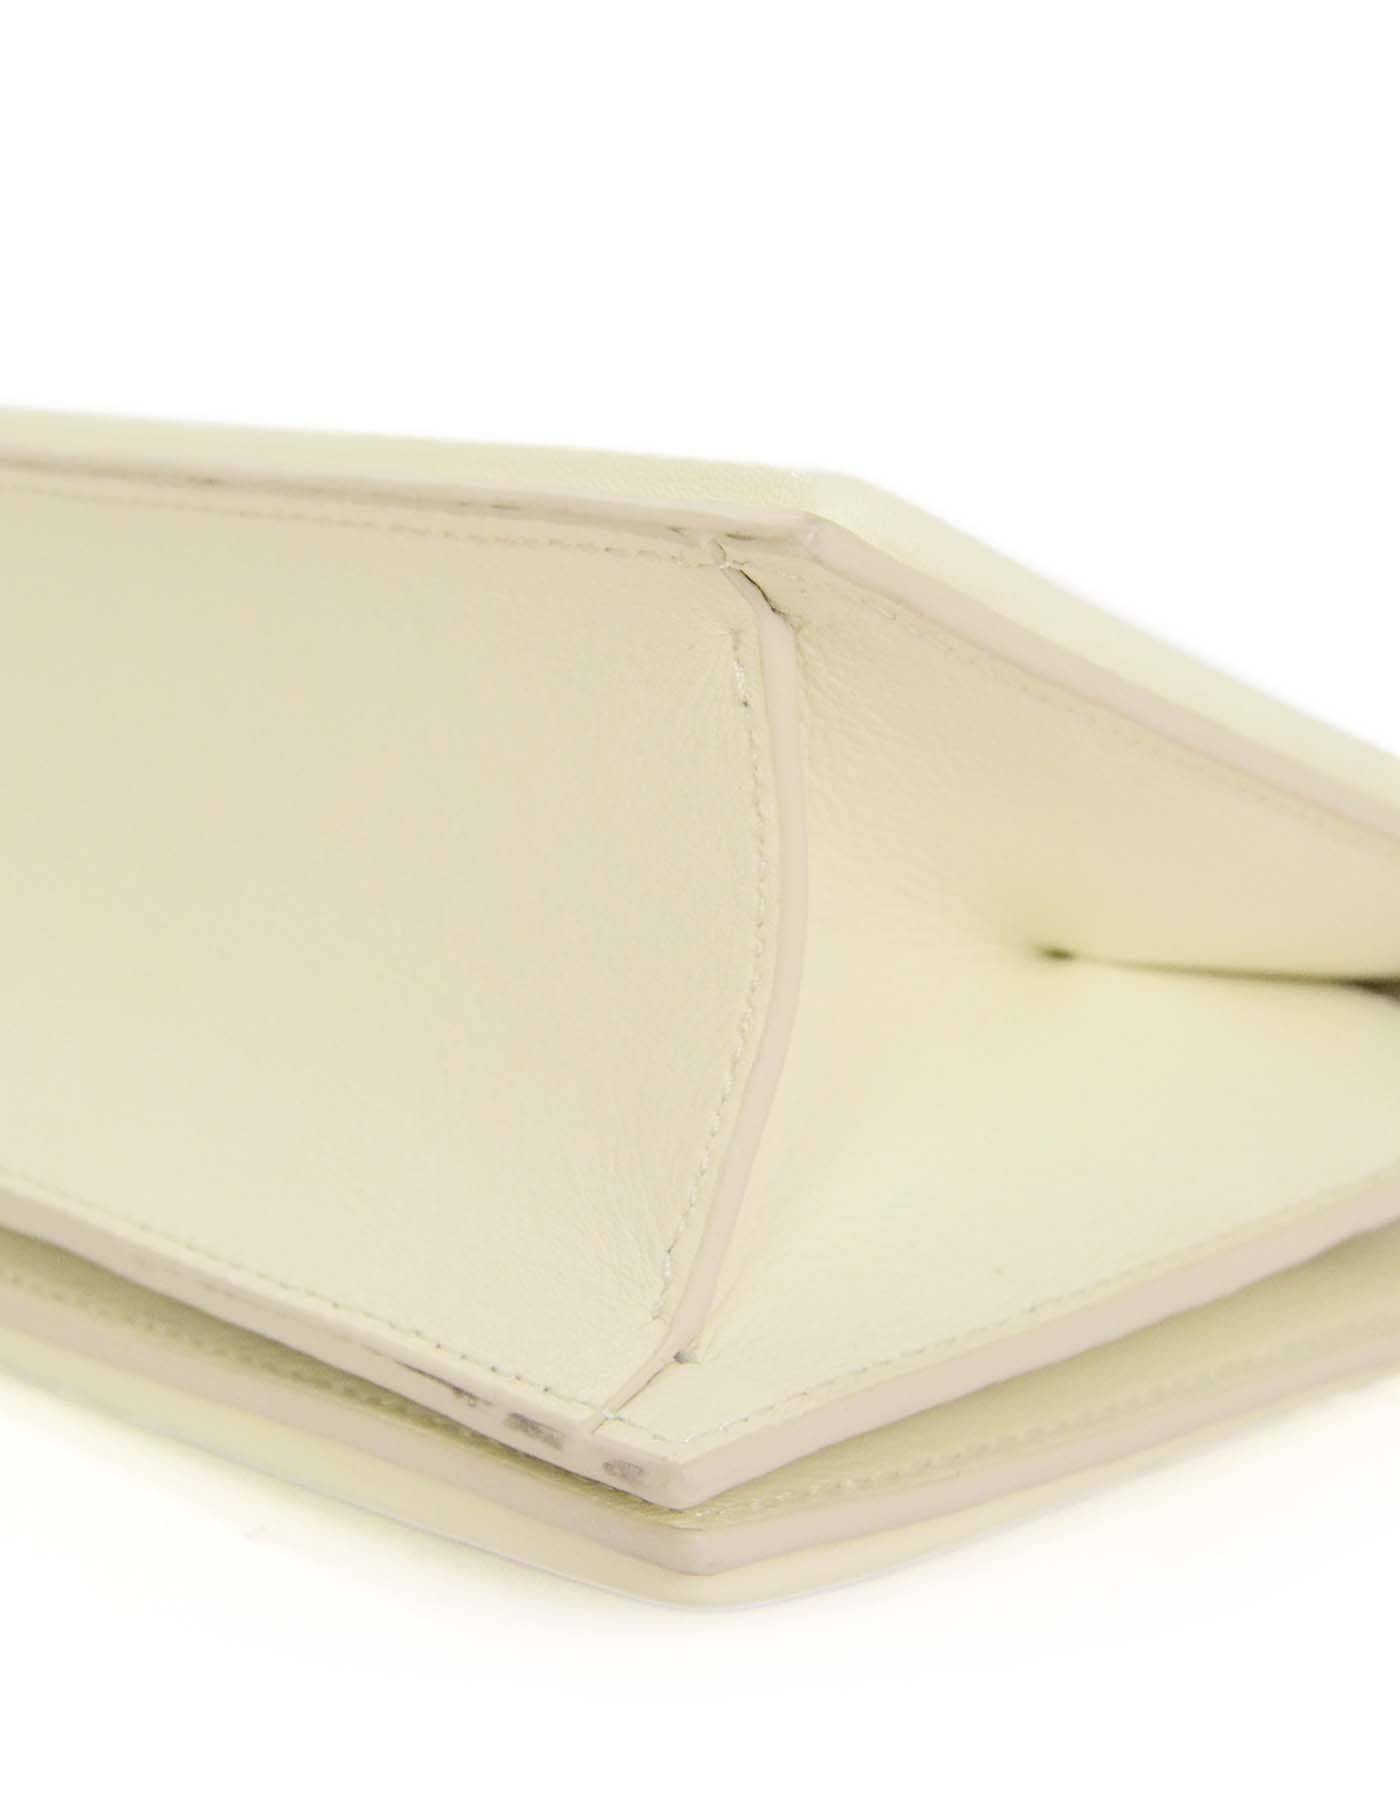 Beige  3.1 Philip Lim Ivory Mini Structured Flap Shoulder Bag SHW rt. $695